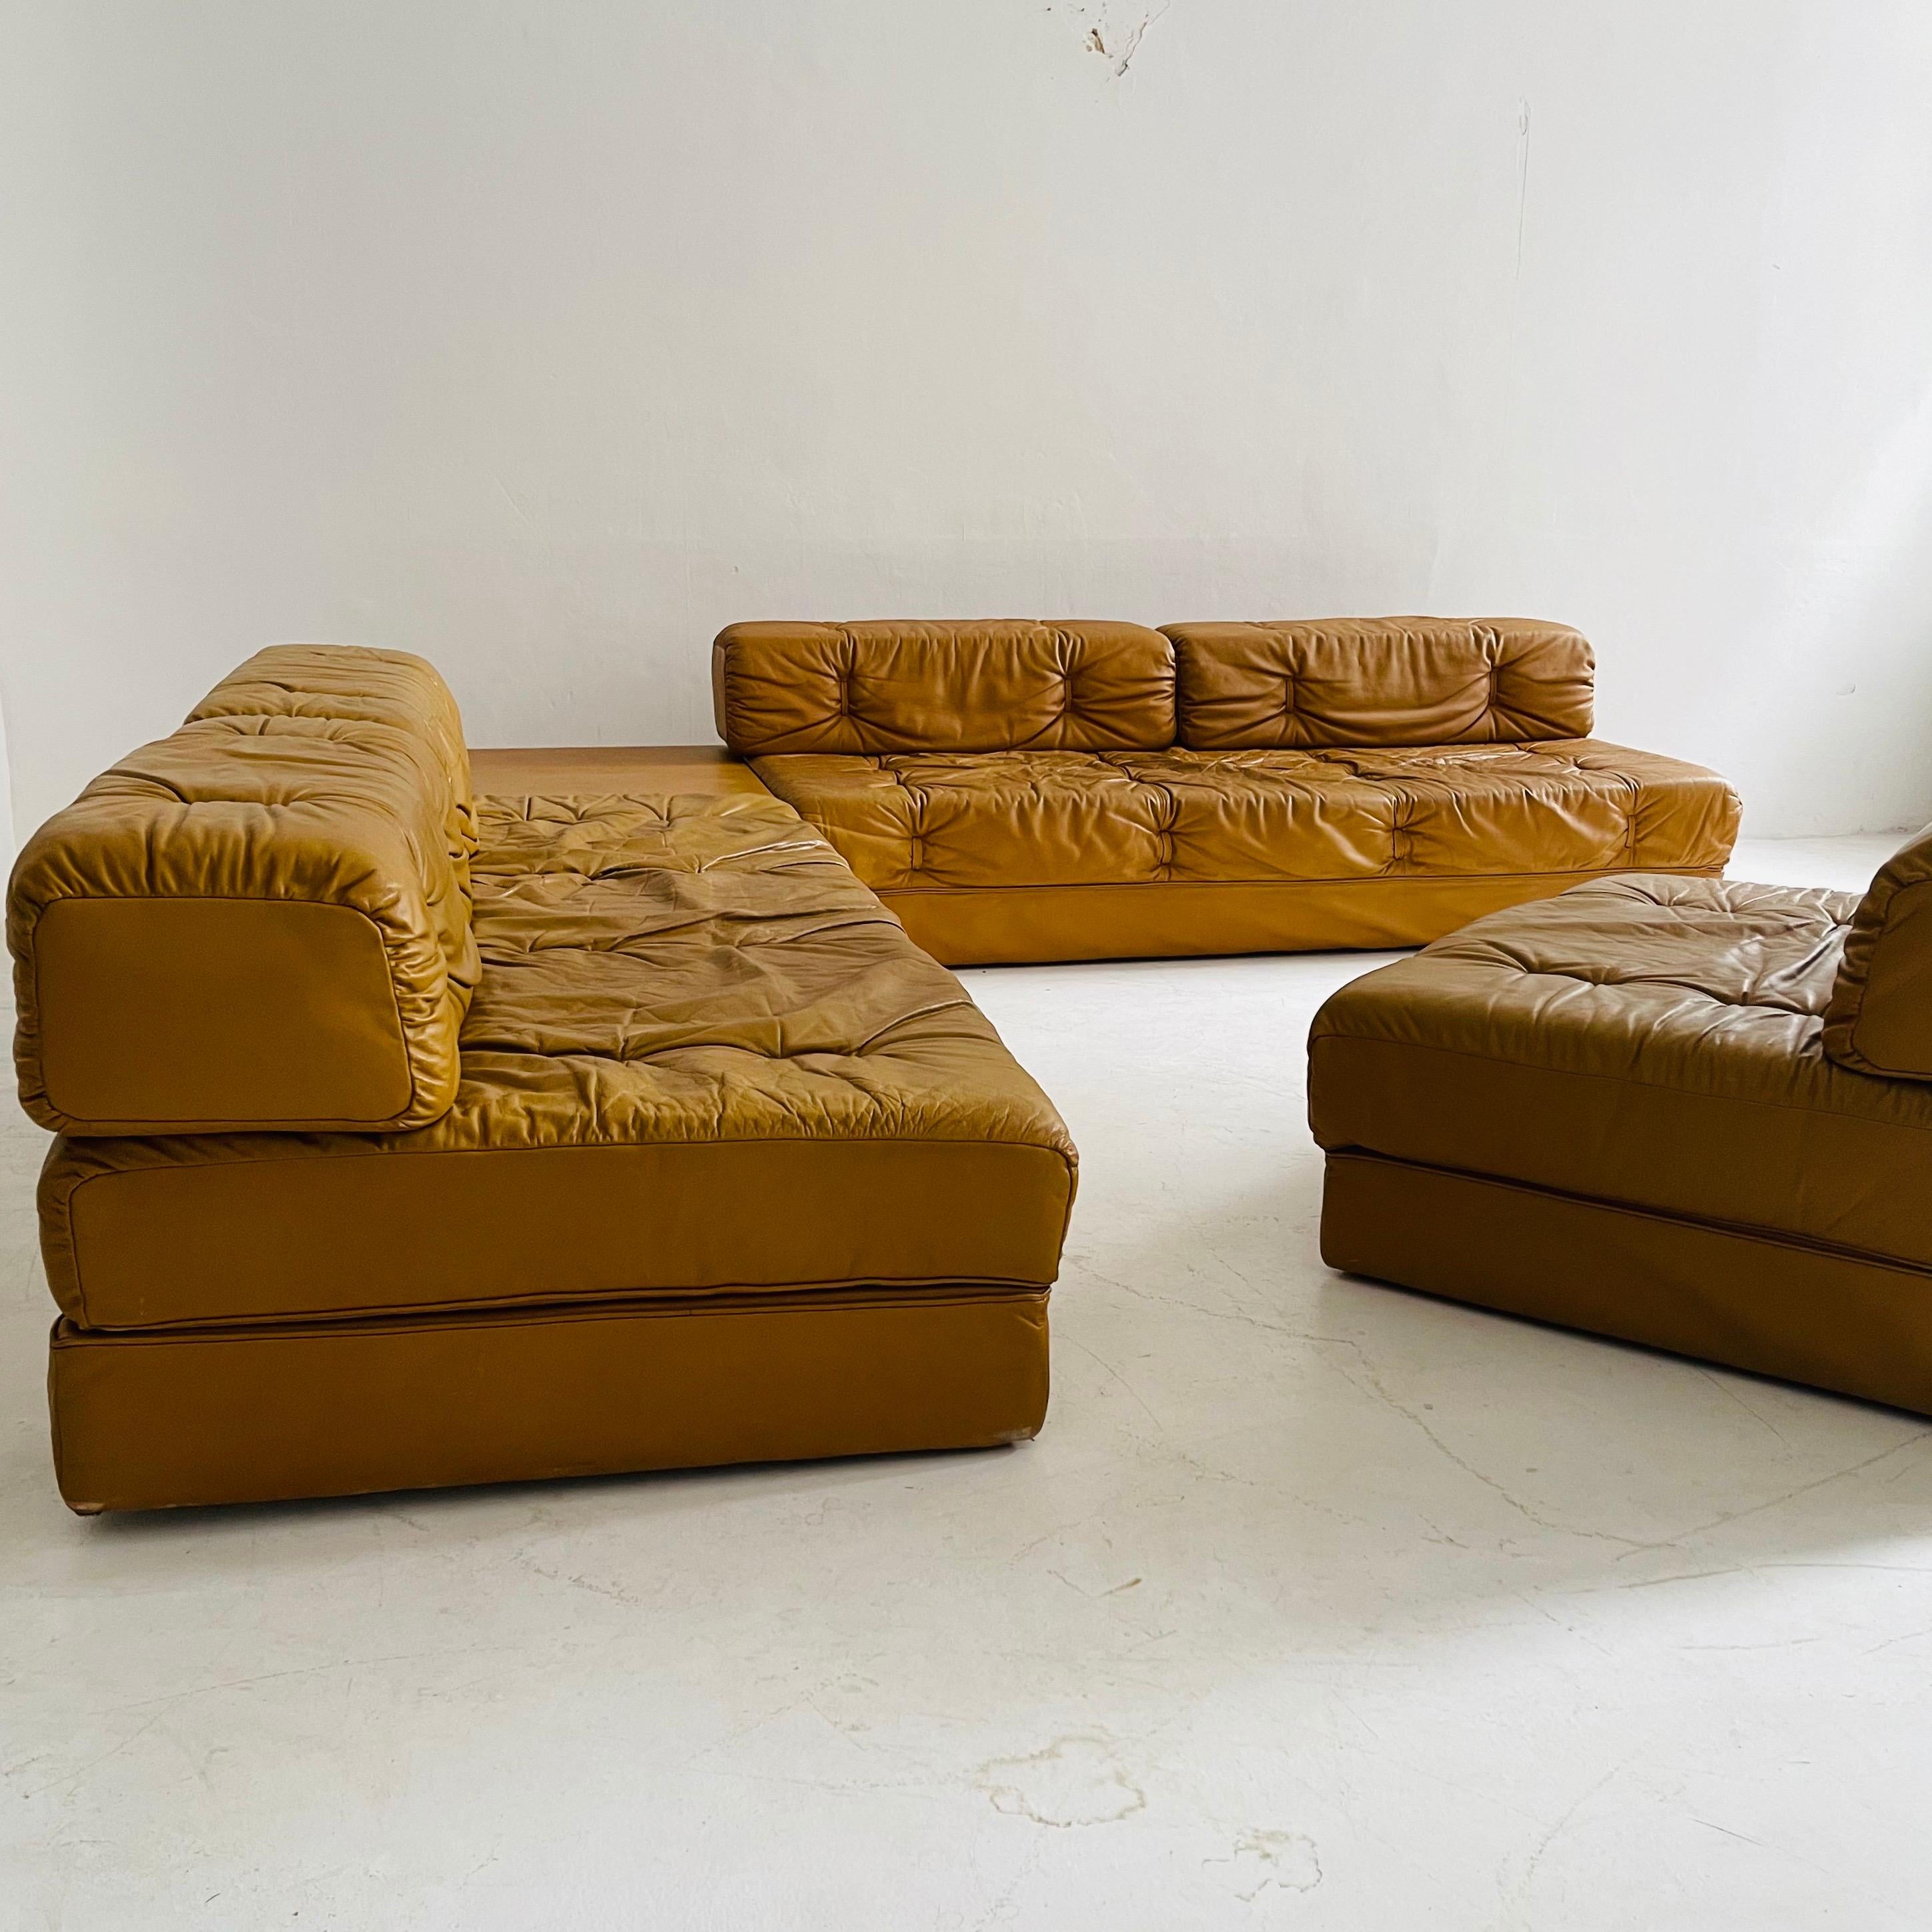 Late 20th Century Wittmann Atrium Cognac Leather Living Room Suite Sofa Daybeds, Austria, 1970s For Sale